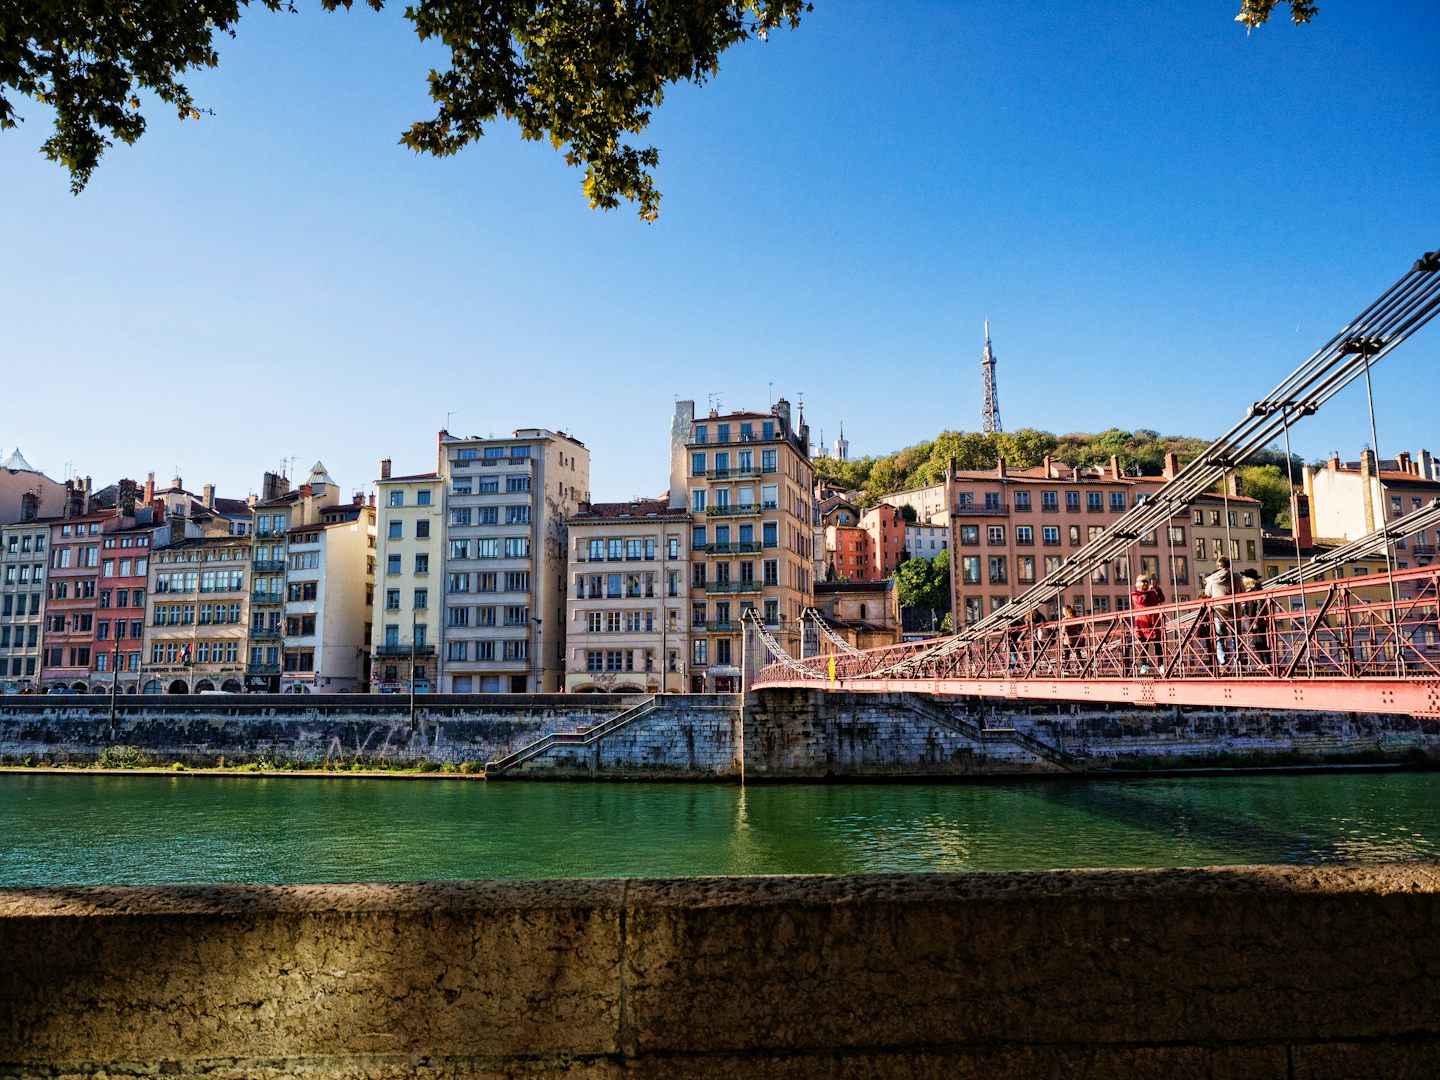 footbridge across the Saone river in Lyon